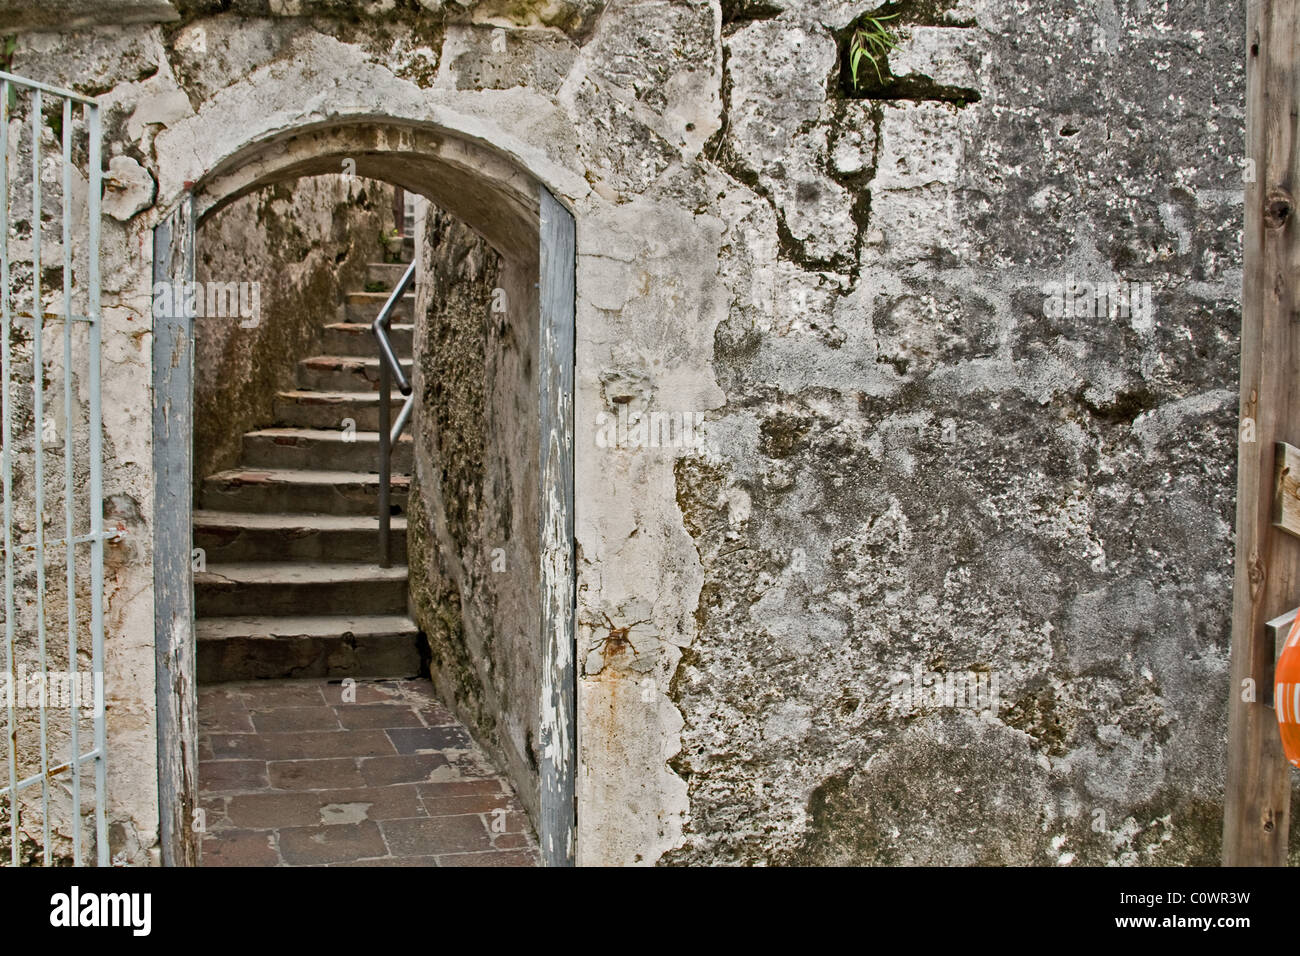 Stone doorway leading ot s stairway Stock Photo